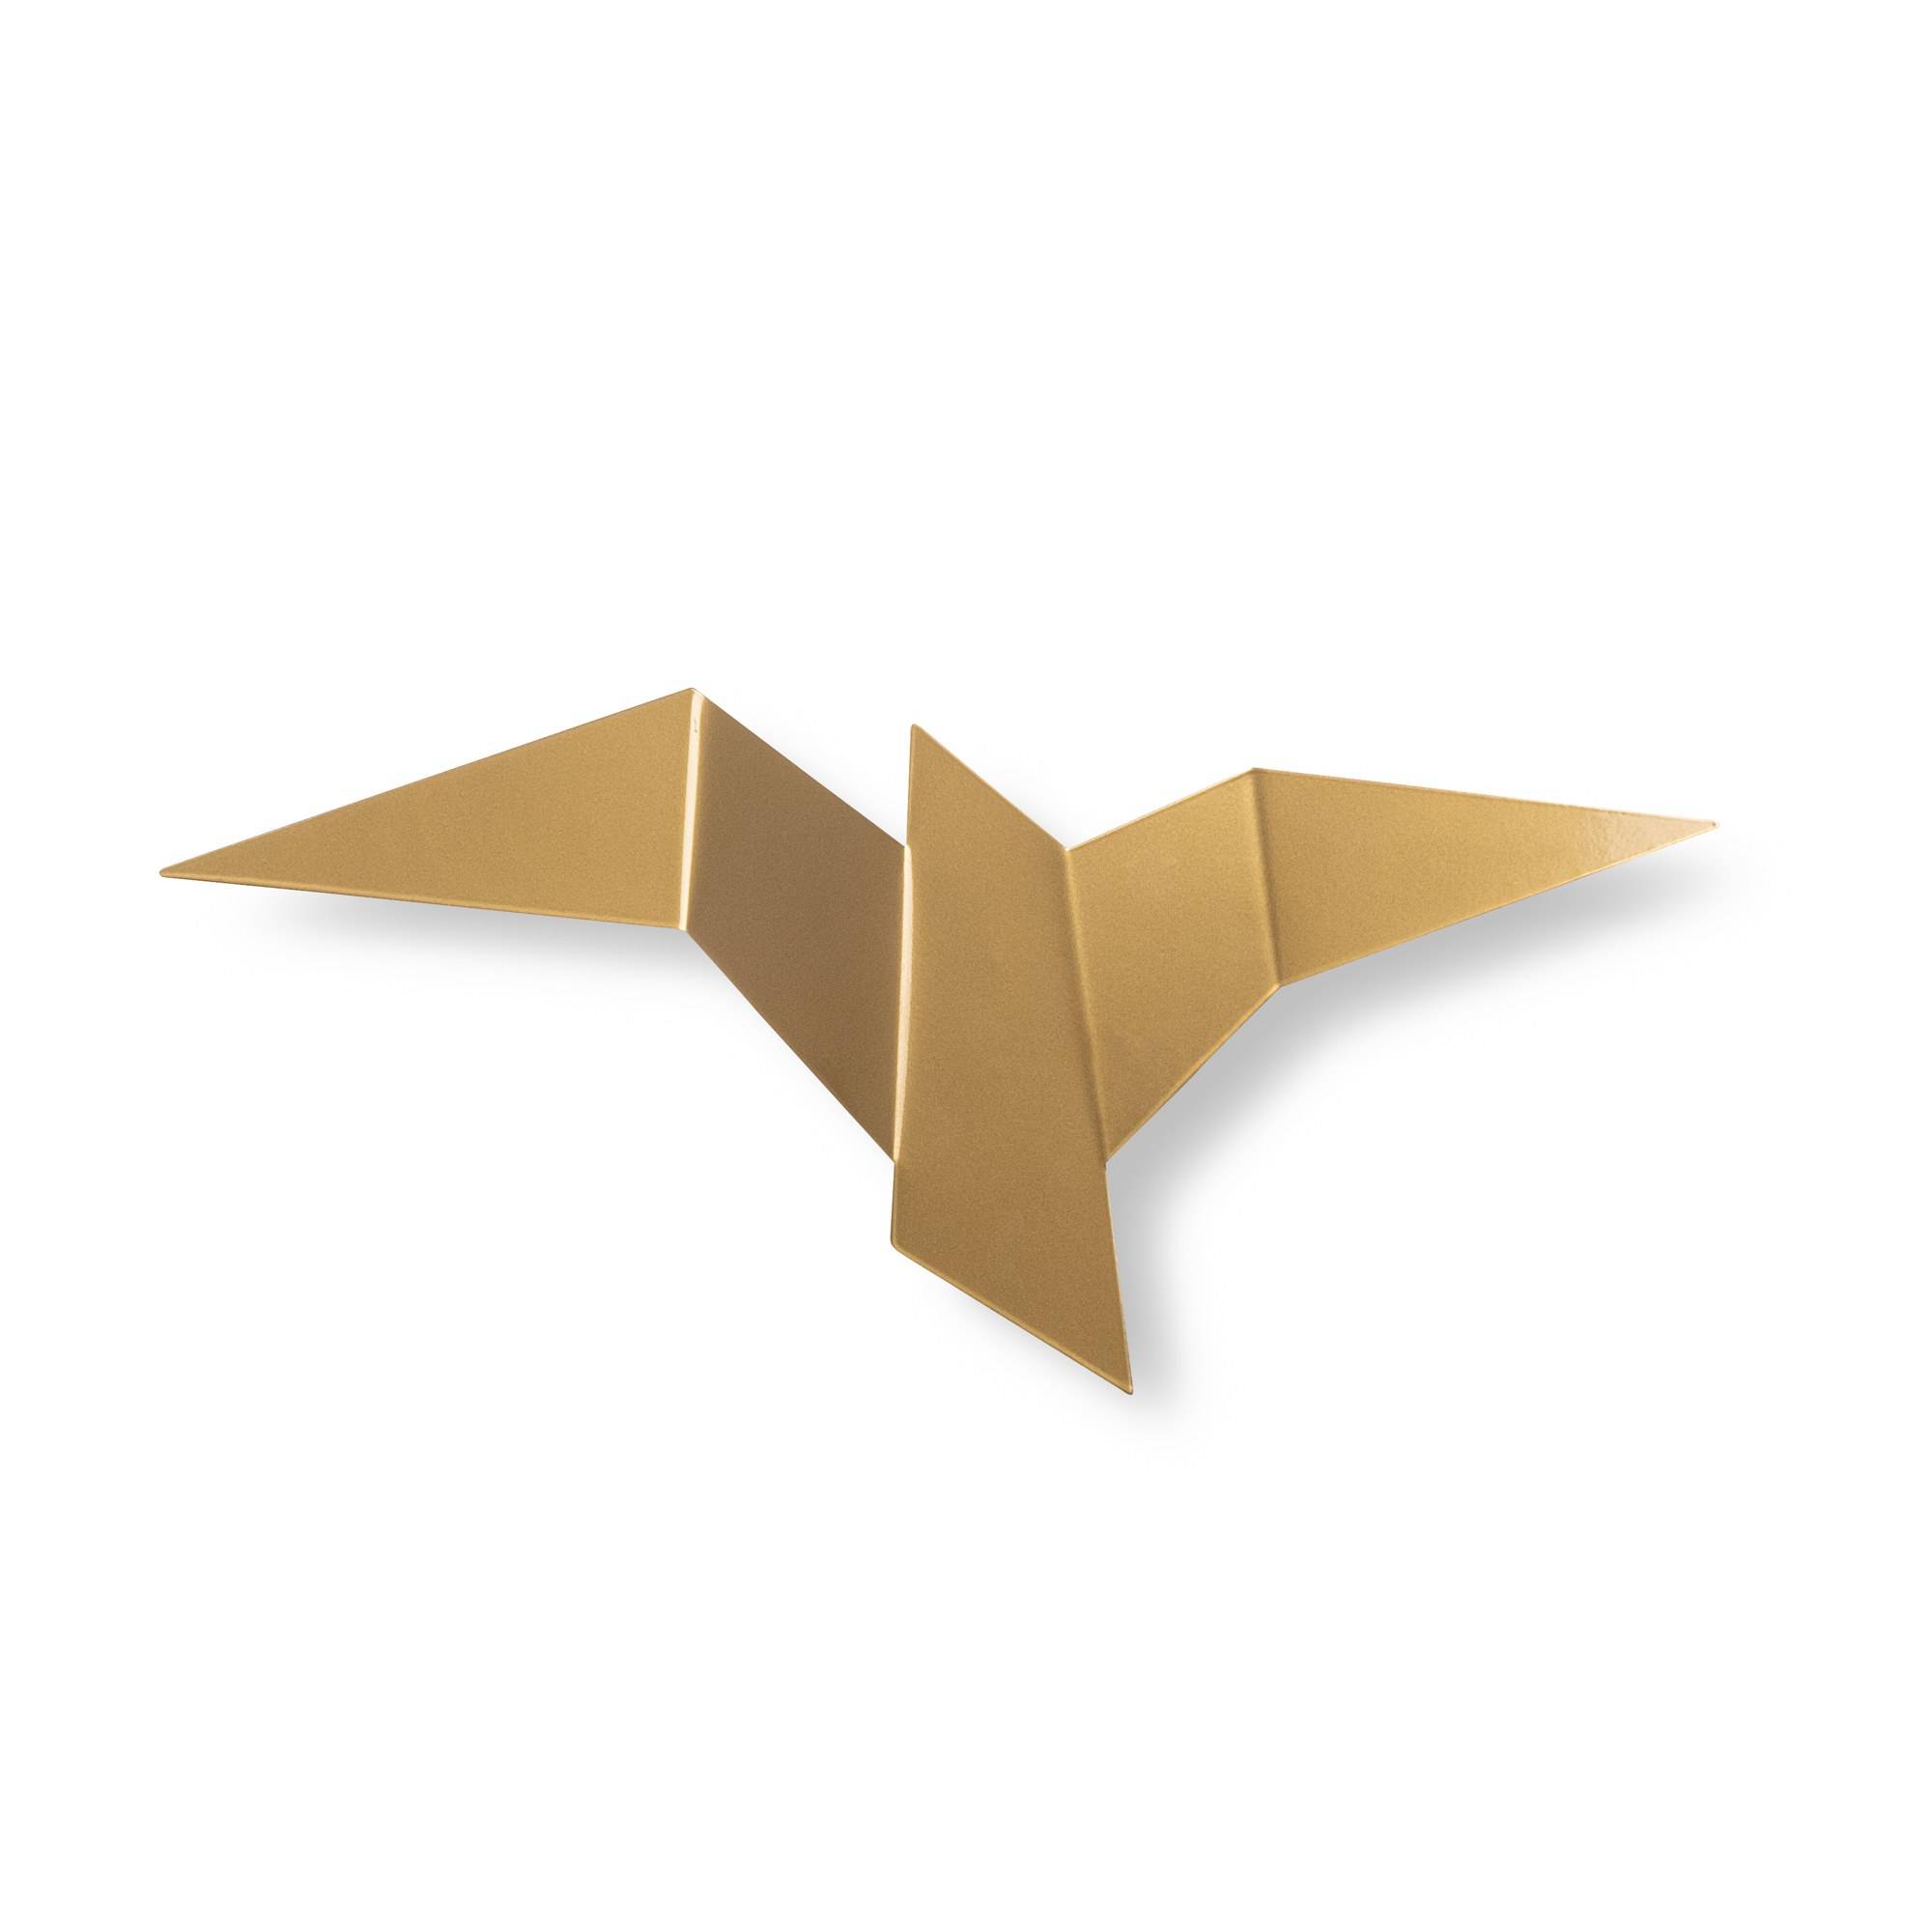 Lampada da parete Garuda origami bird design L56cm Metallo Oro